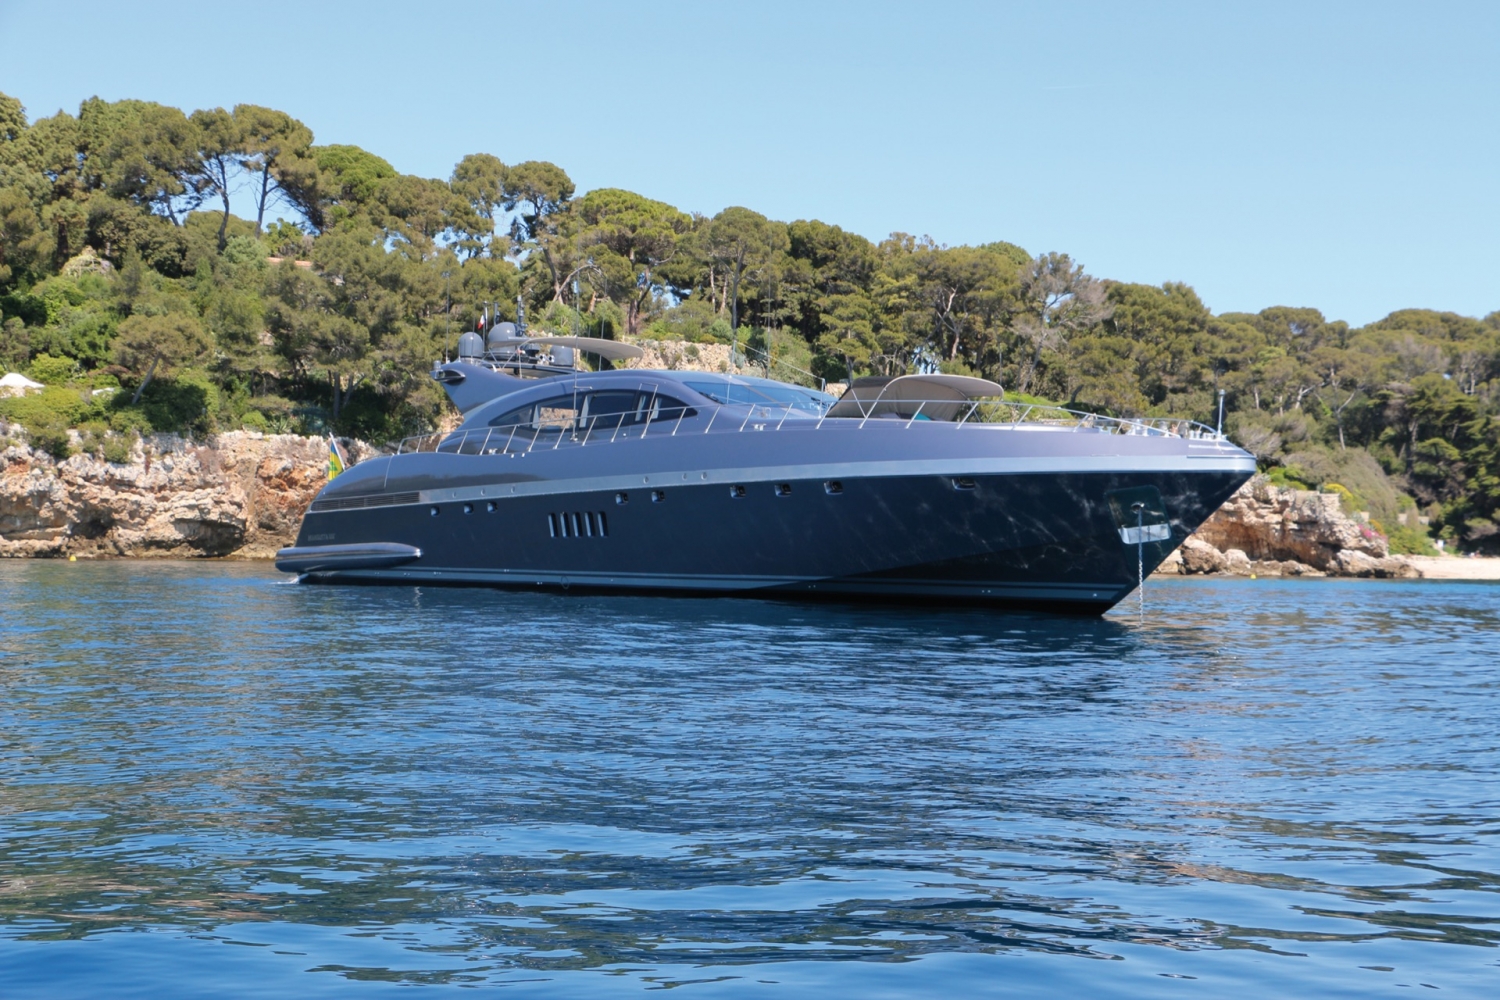 Stylish motor yacht